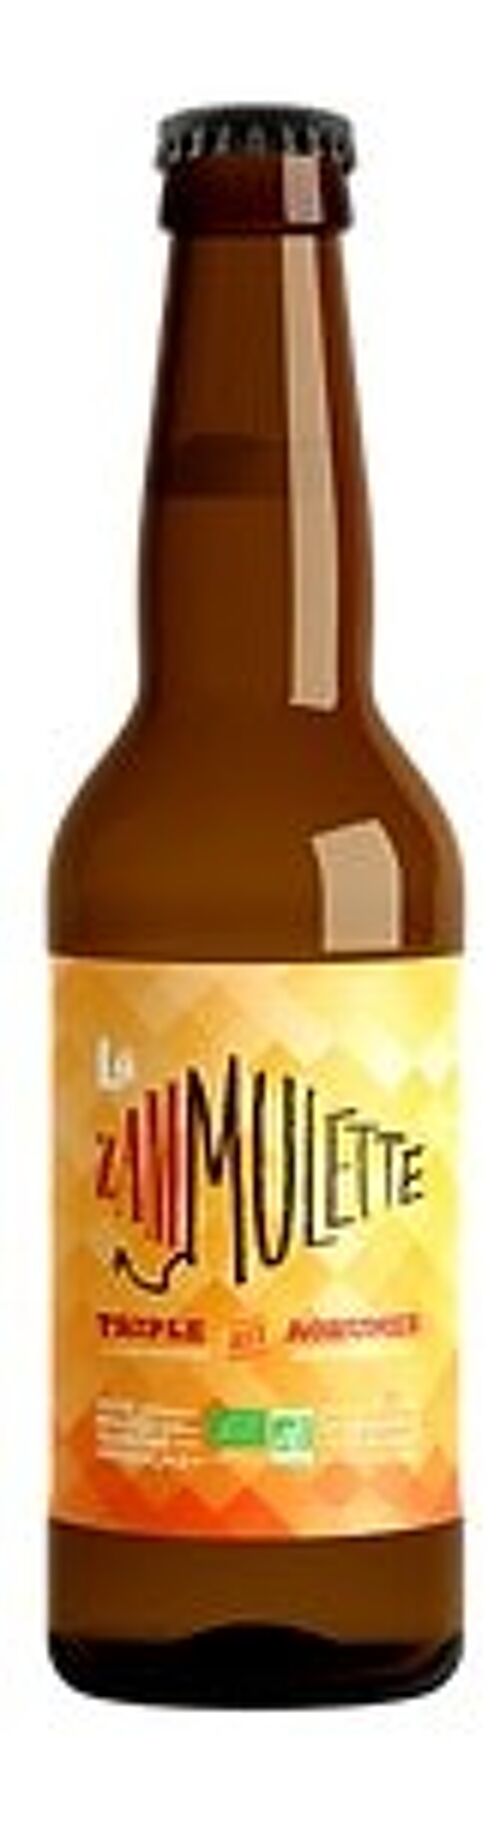 Bière Bio Triple aux Agrumes ZamMulette